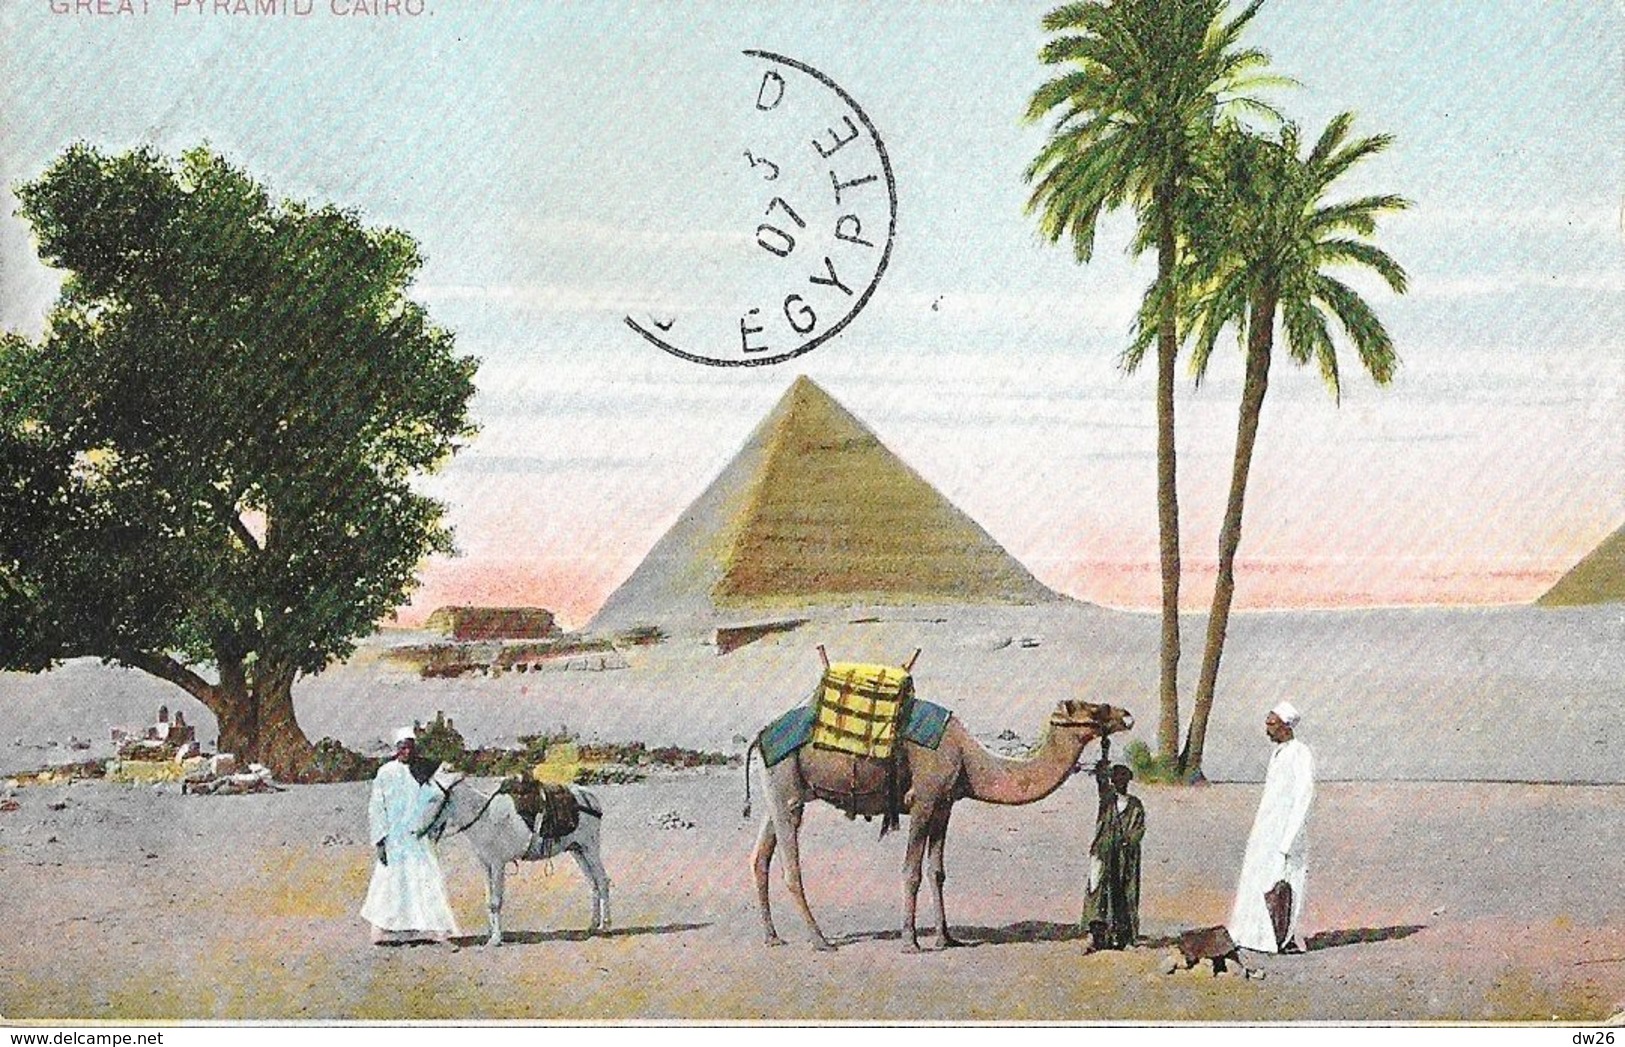 Le Caire, Les Pyramides (Great Pyramid, Cairo) - Th. E.L. Série 945 - Carte Non écrite - Caïro